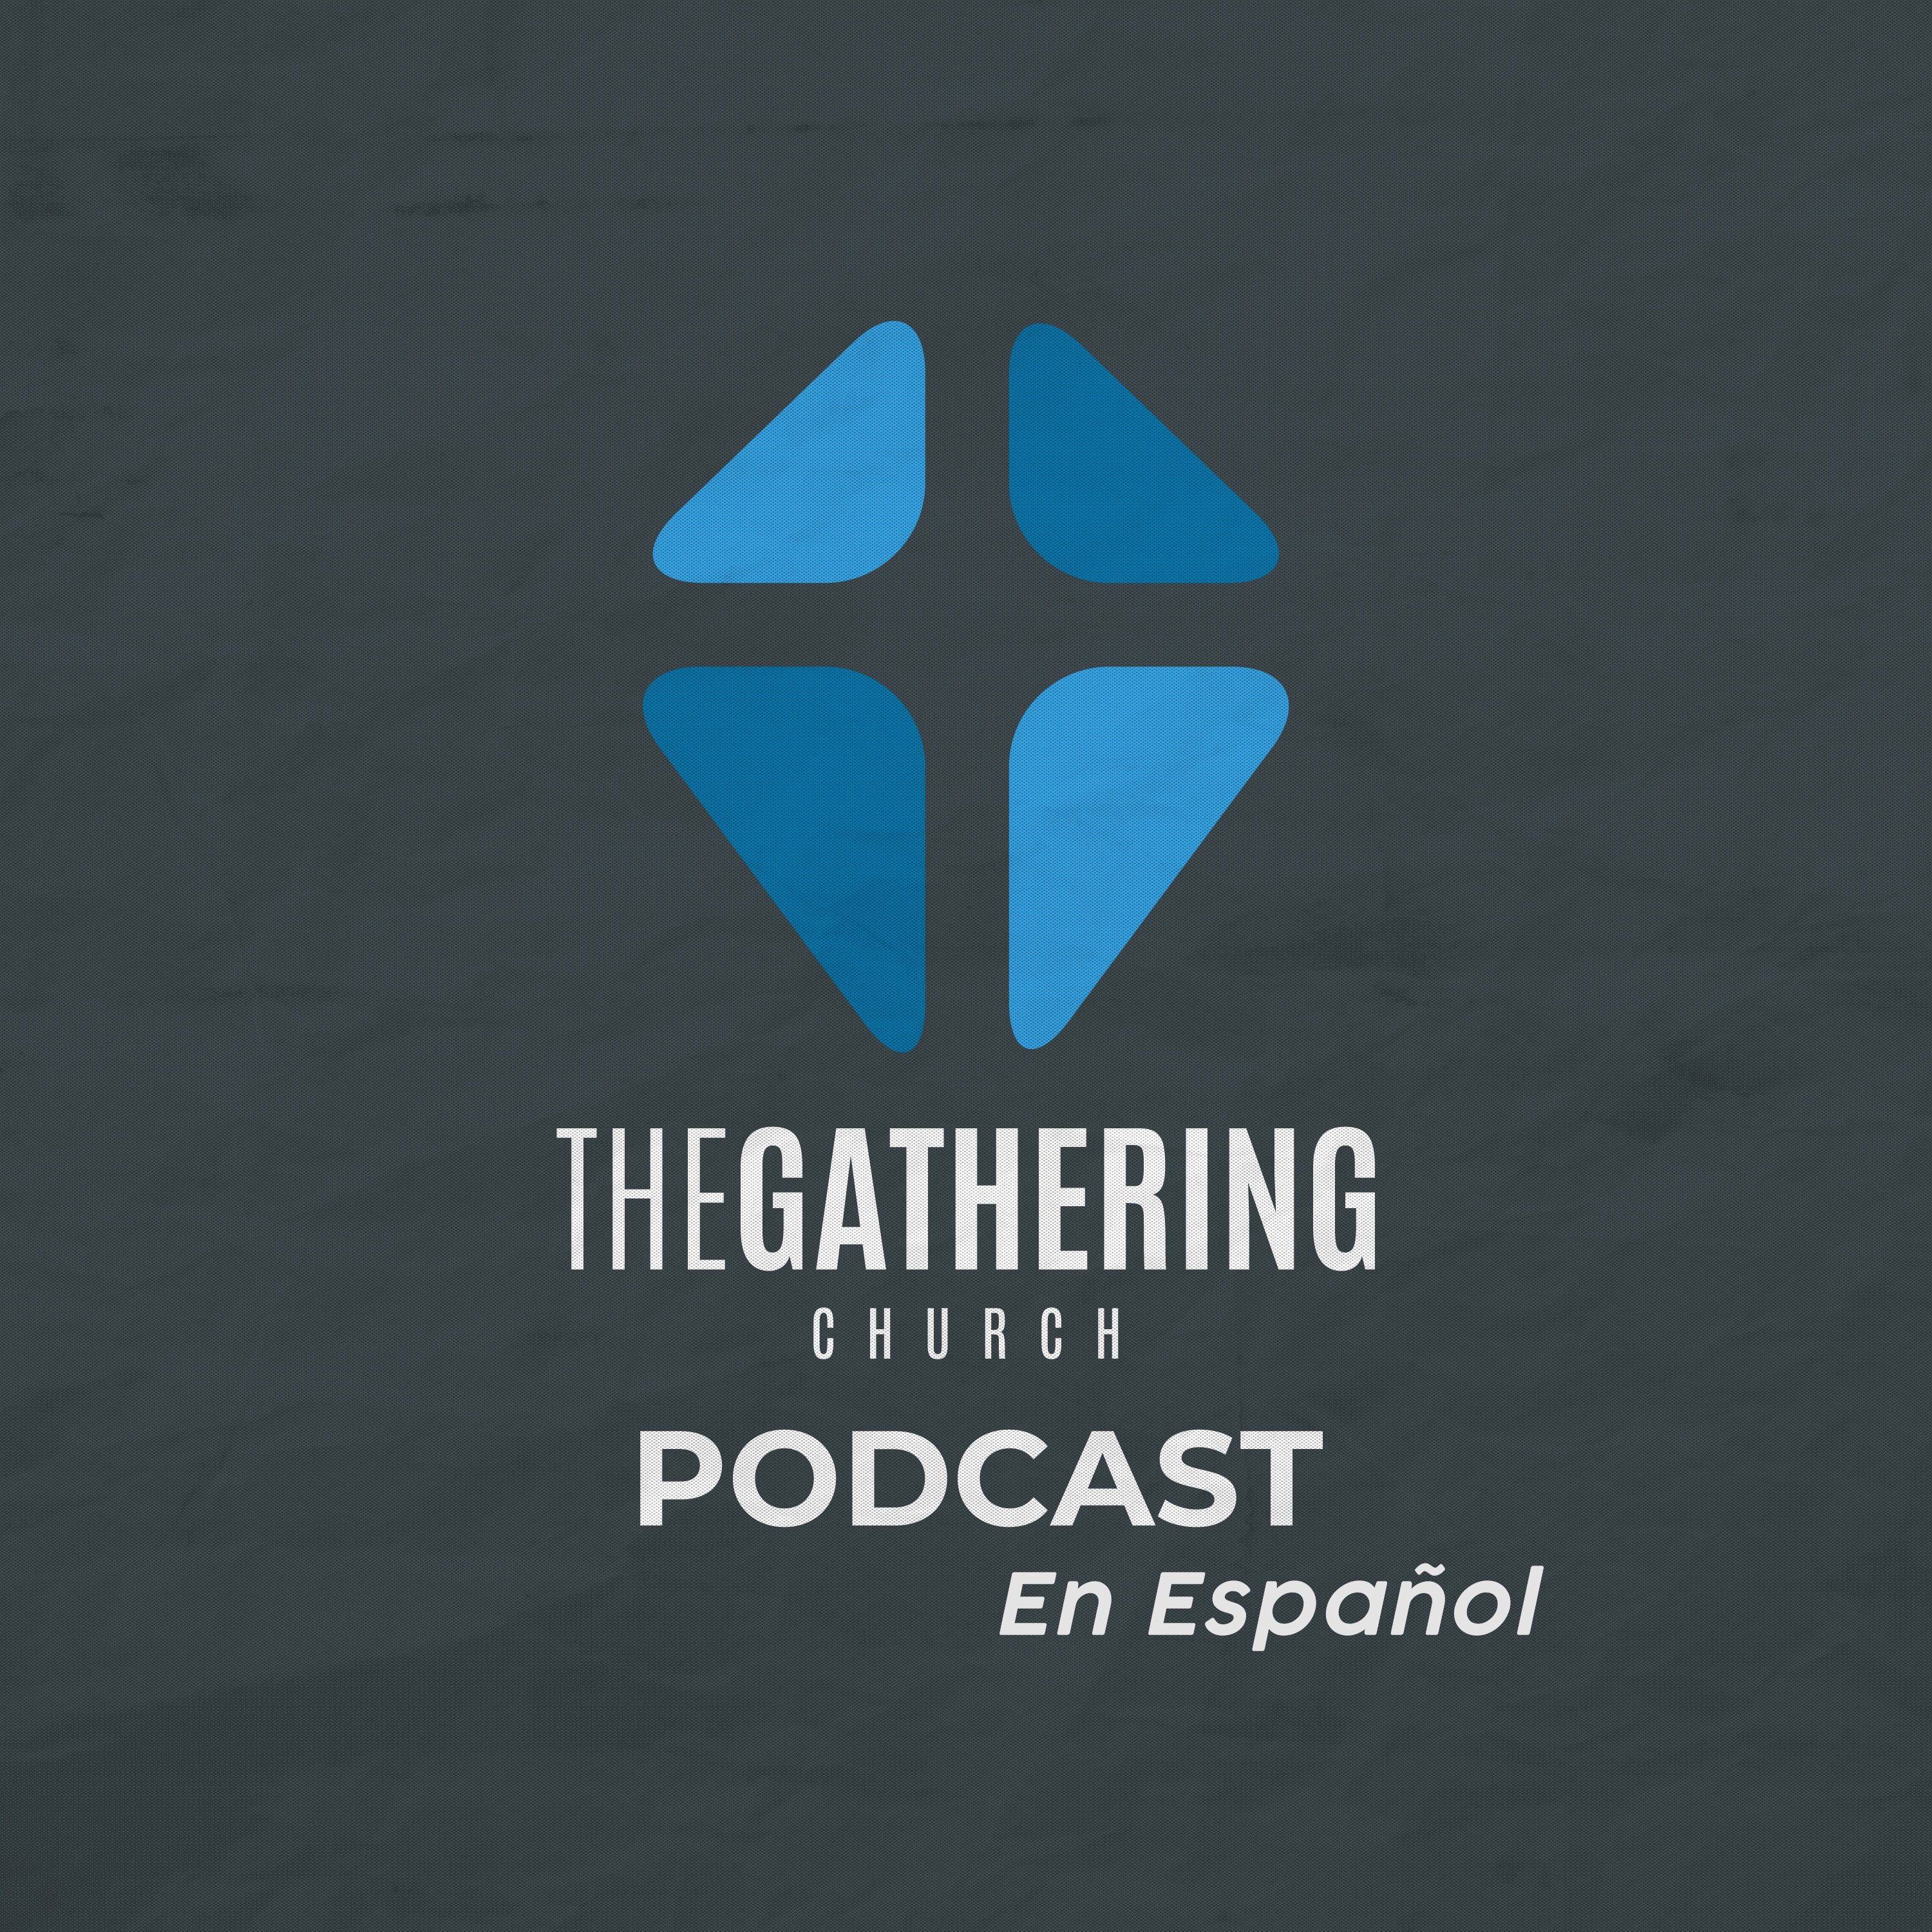 The Gathering Church Podcast en Español